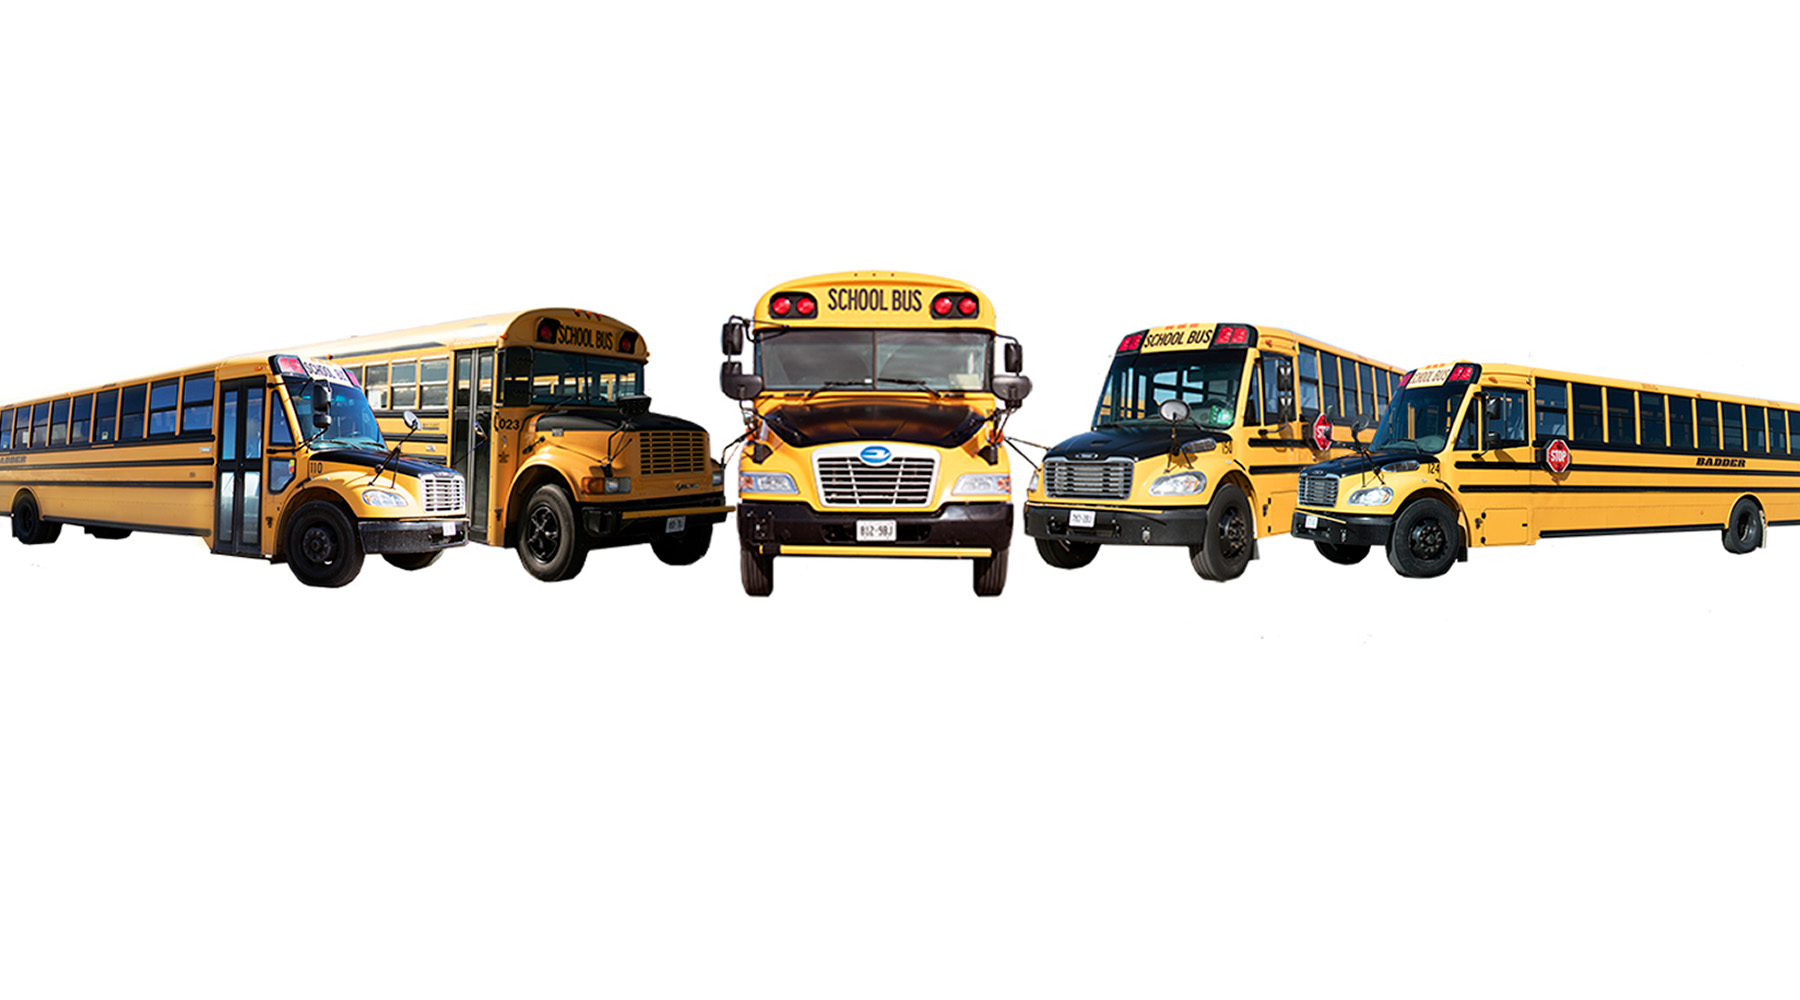 Five stunning Badder School Buses of different models